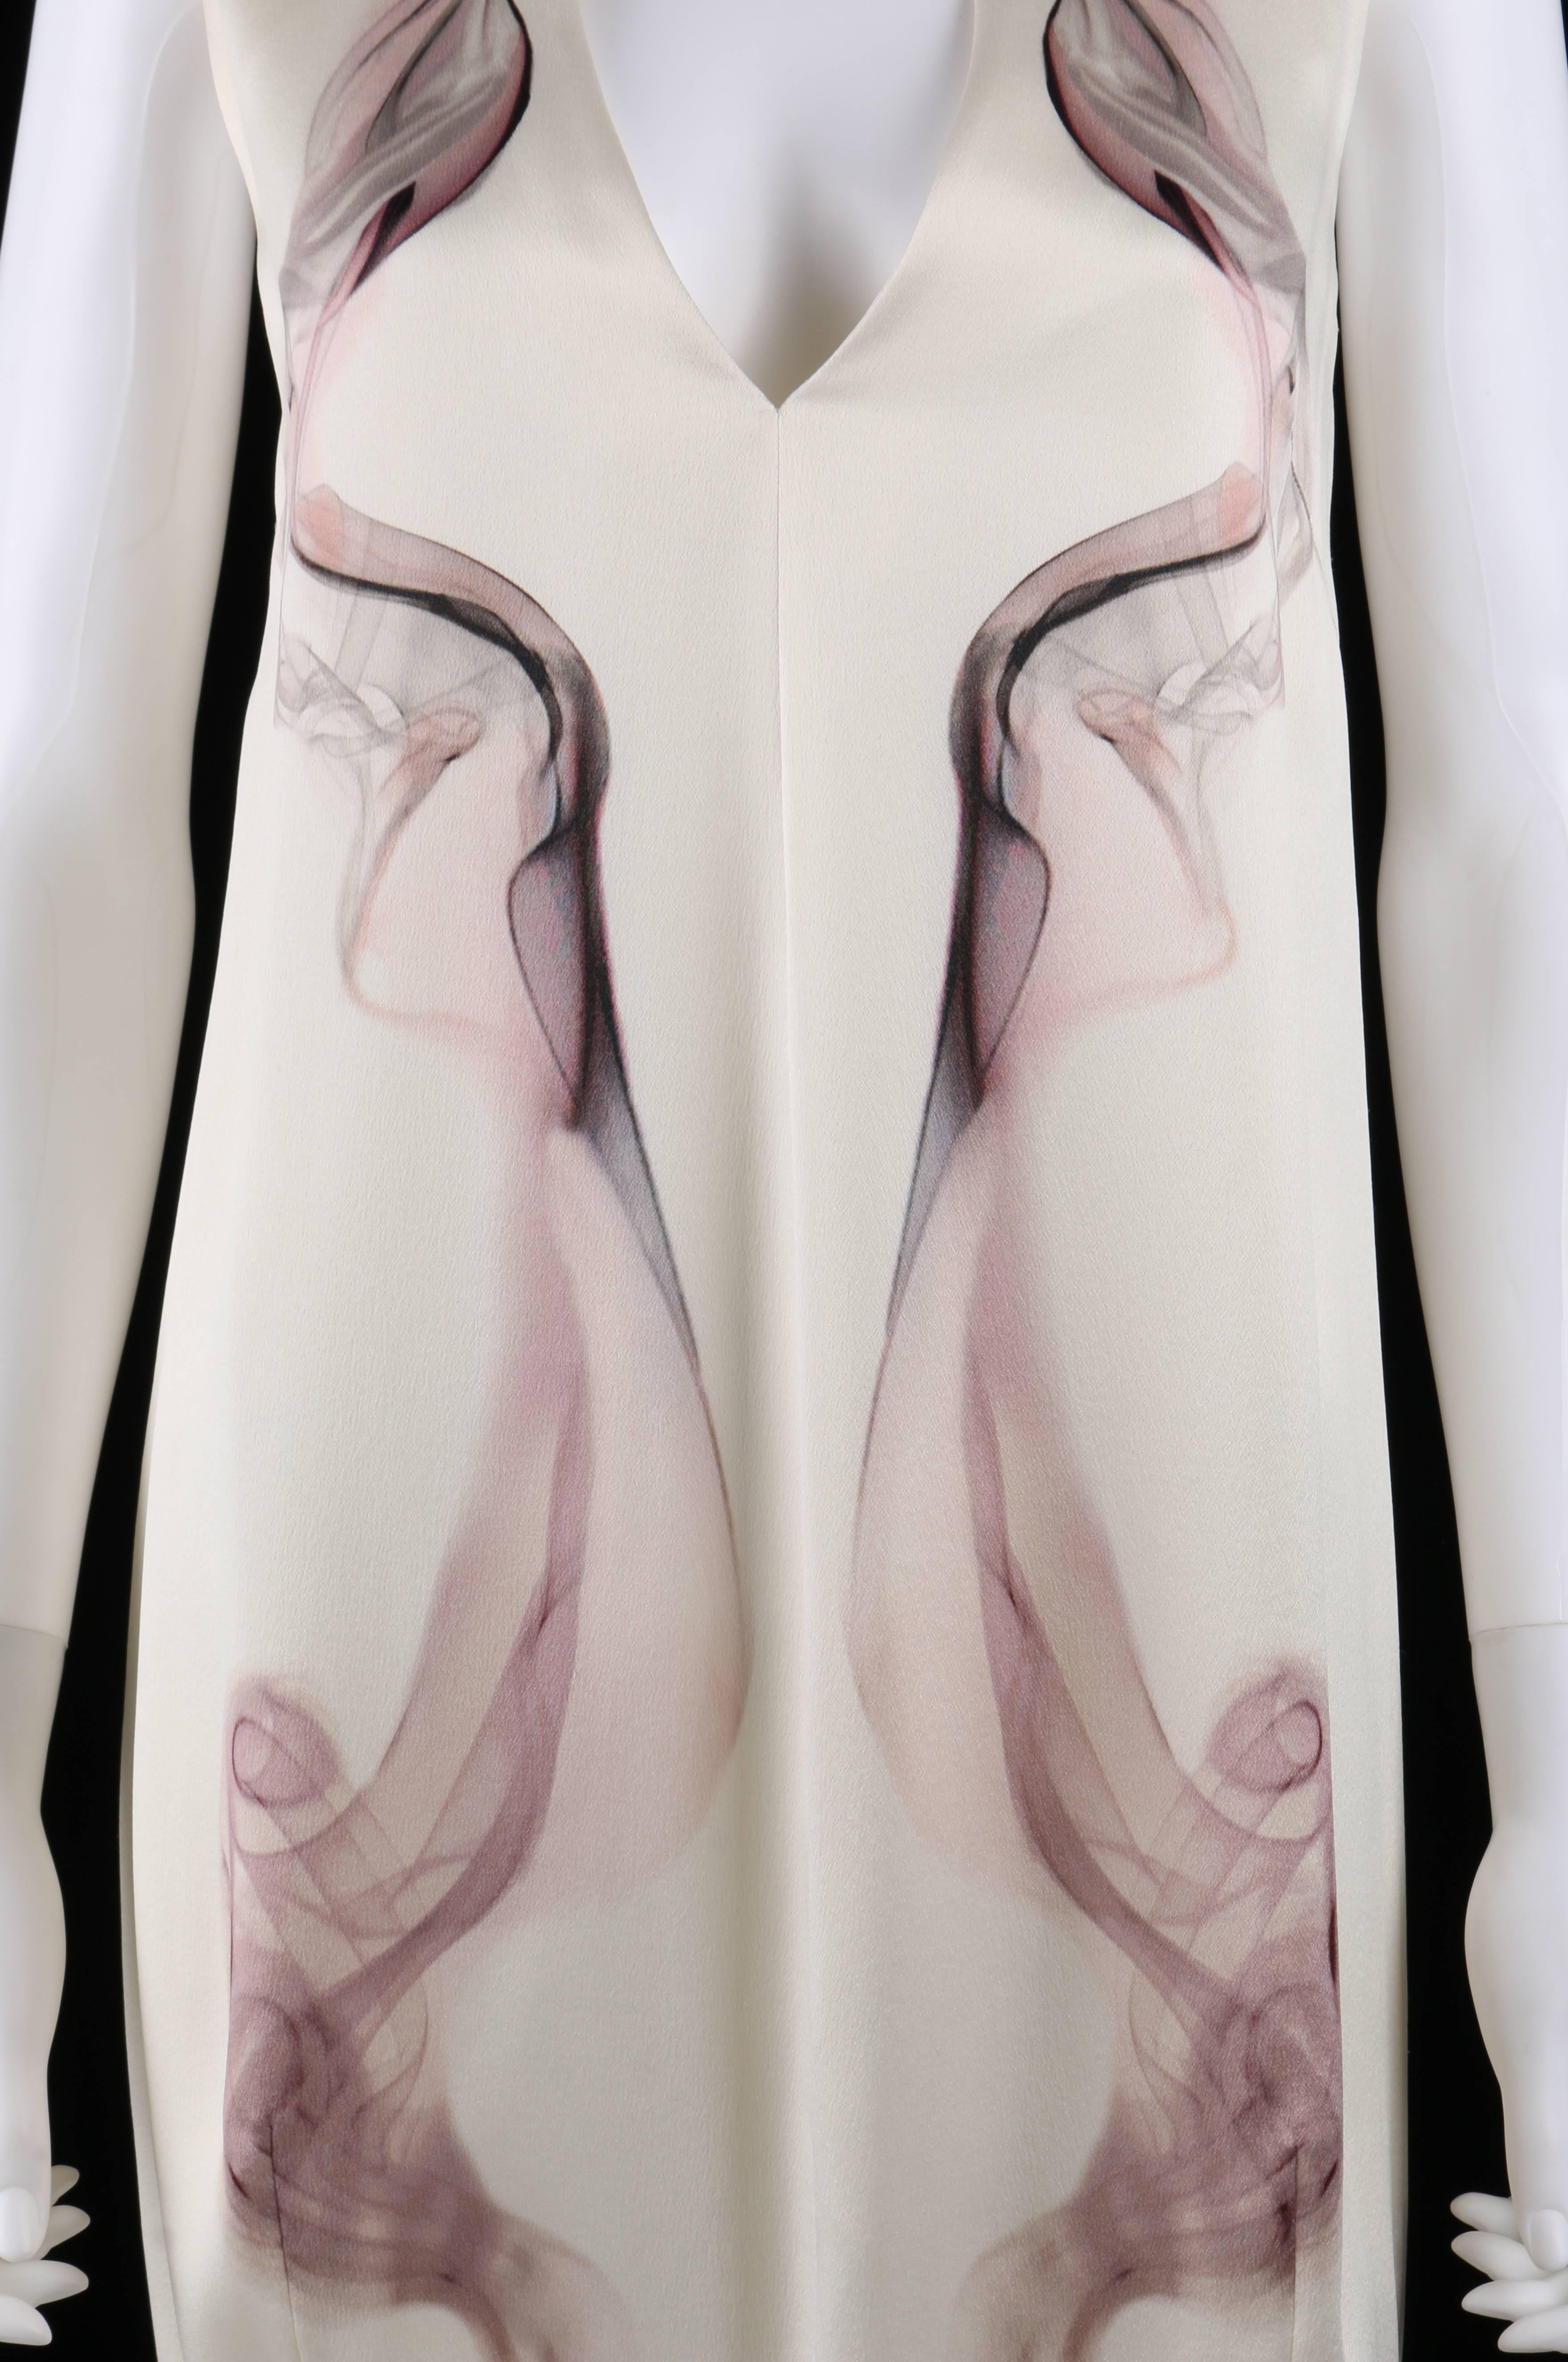 Women's NWT S/S 2009 ALEXANDER McQUEEN White 100% Silk Smoke Print Shift Dress Size 44 For Sale